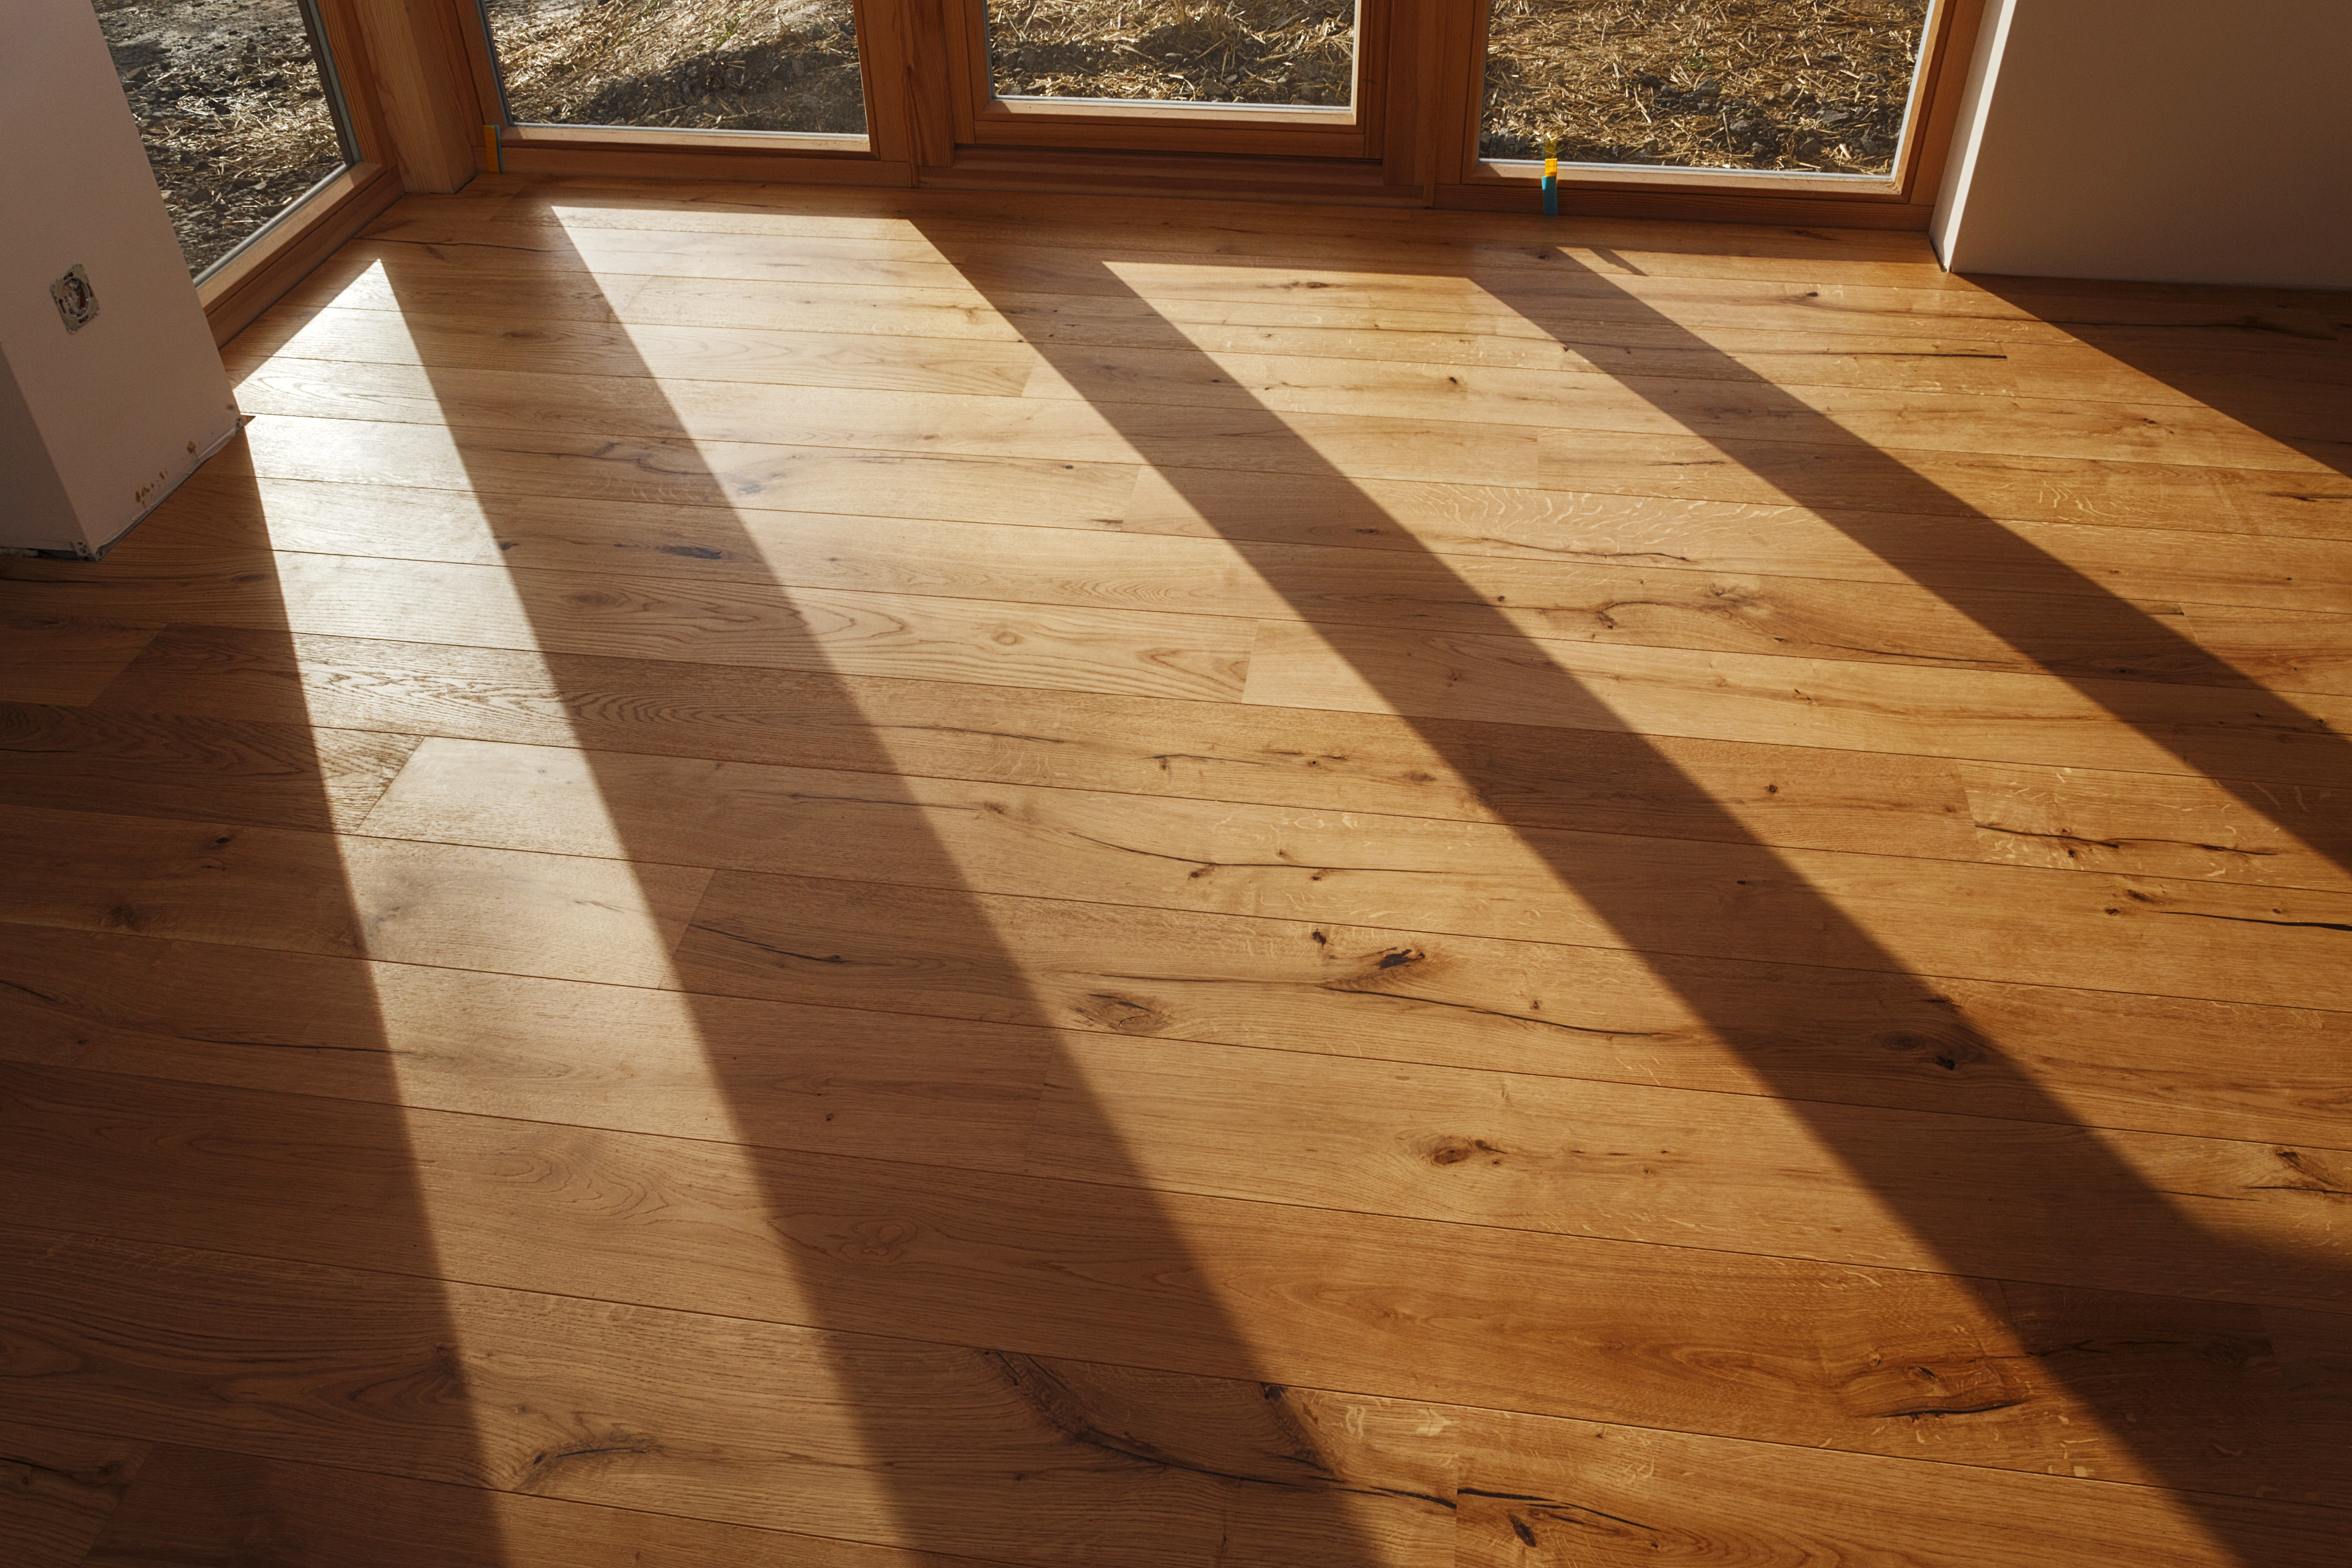 Wood Flooring Hardwood Versus, Laminate Hardwood Flooring Cost Per Square Foot